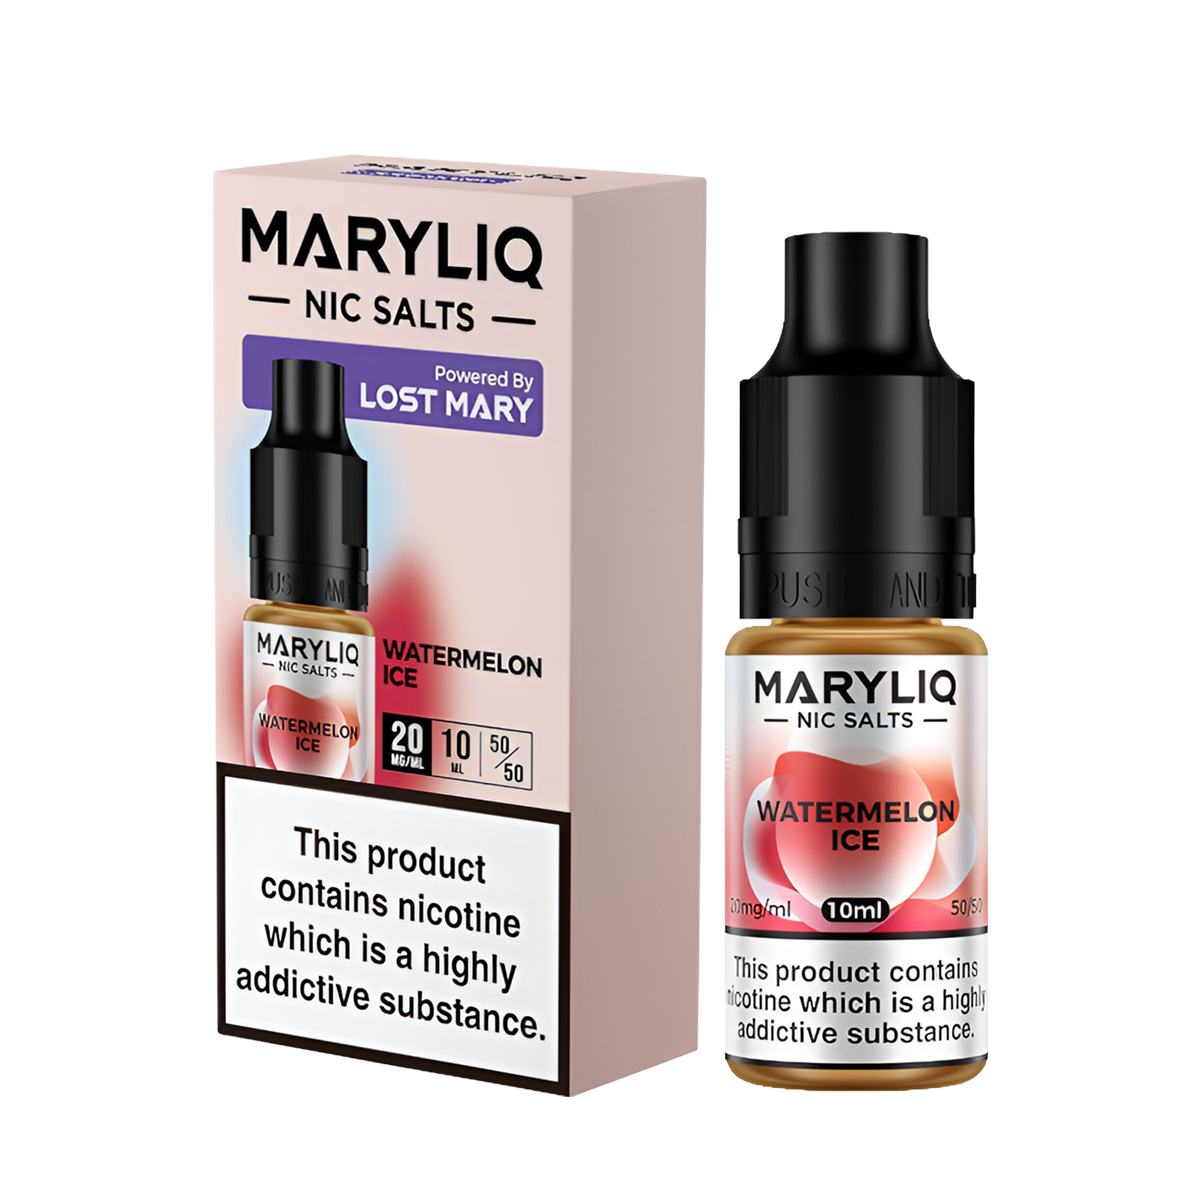 Lost Mary Maryliq Salt Nicotine Vape Juice 20 Mg 10 Ml Watermelon Ice